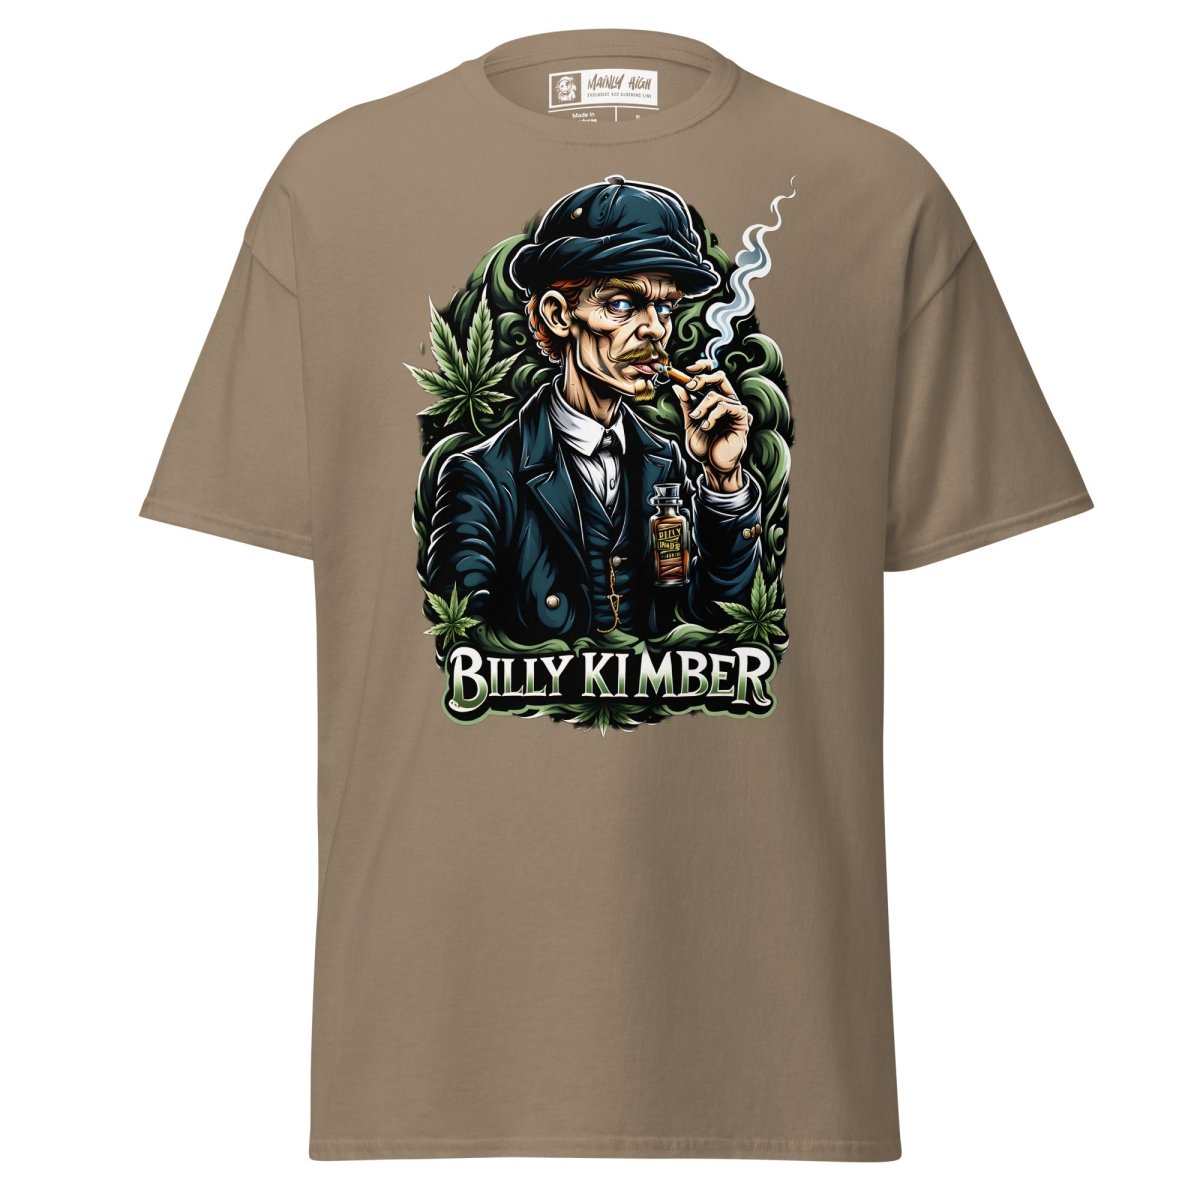 Billy Kimber T-Shirt - Mainly High